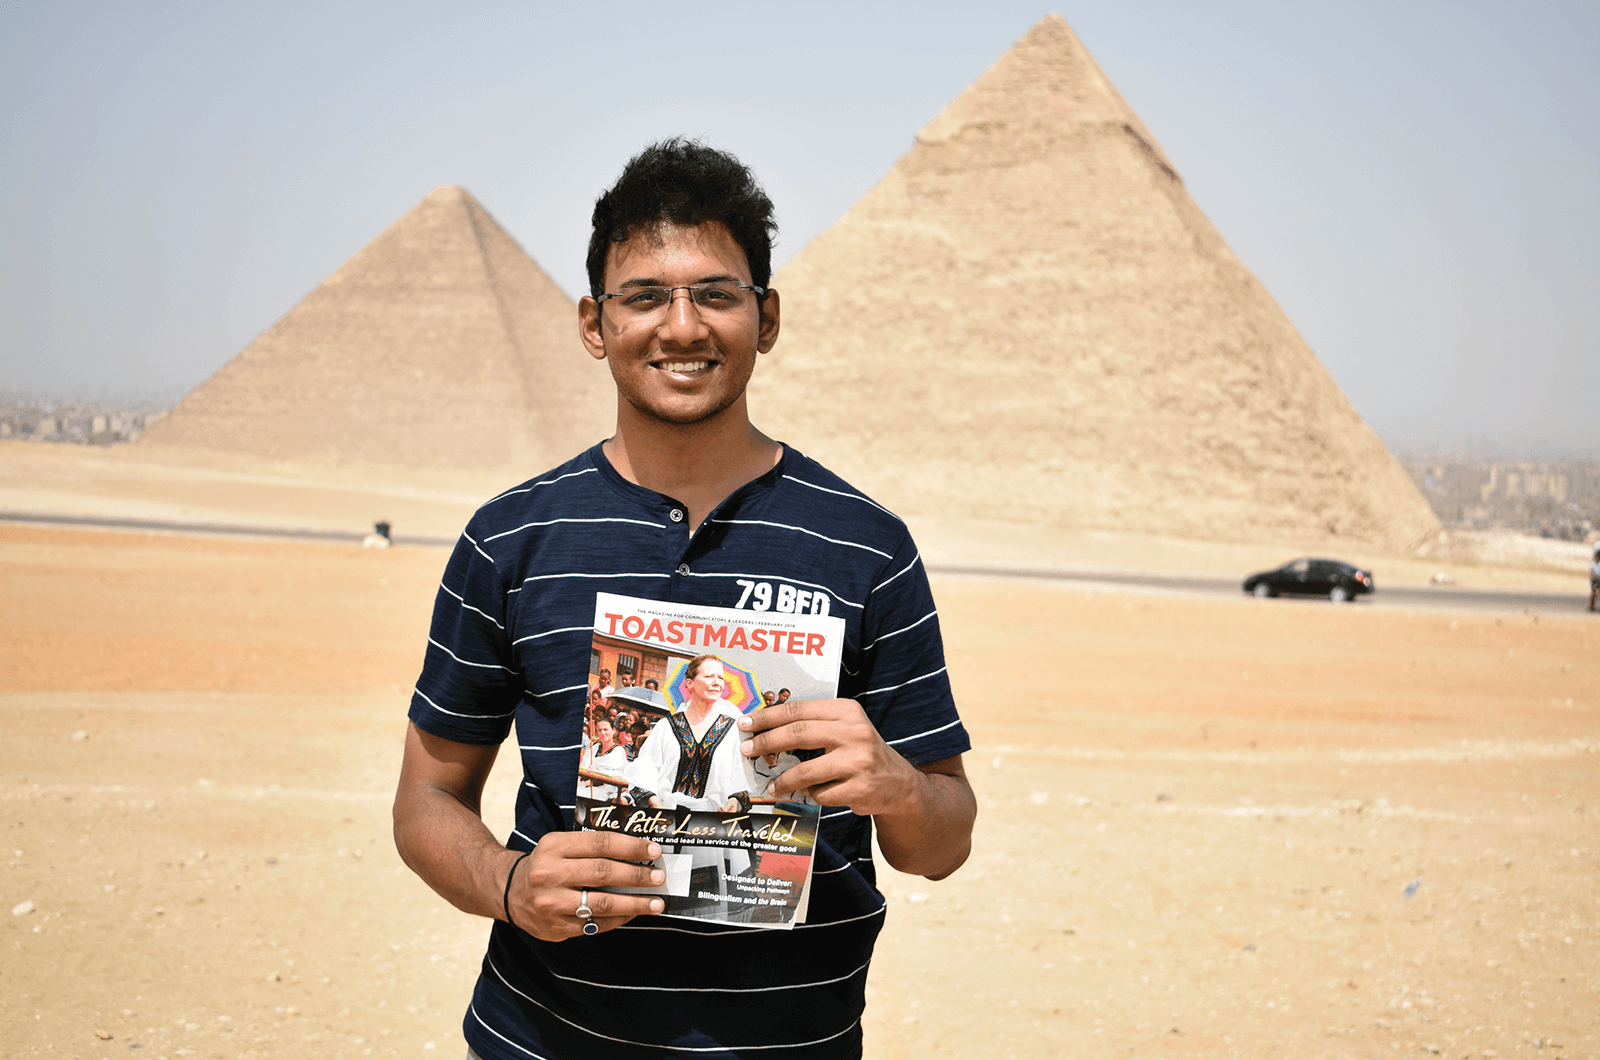 Ronak Wani of Bengaluru, India, visits the pyramids in Giza, Egypt.